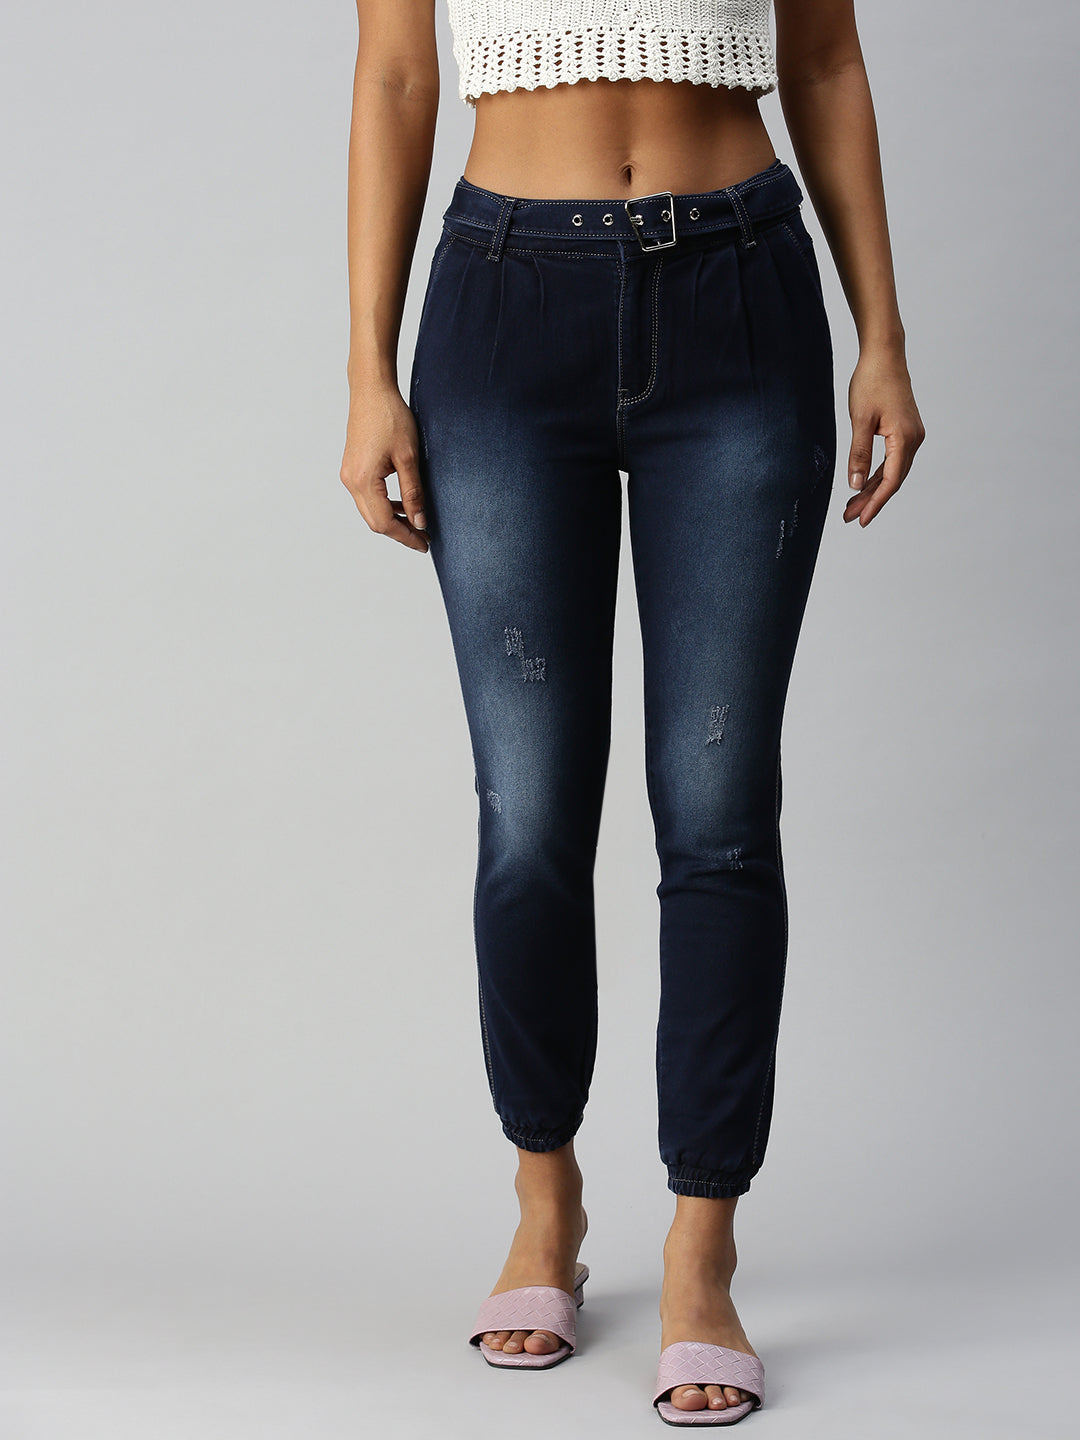 Women's Navy Blue Solid Denim Jeans